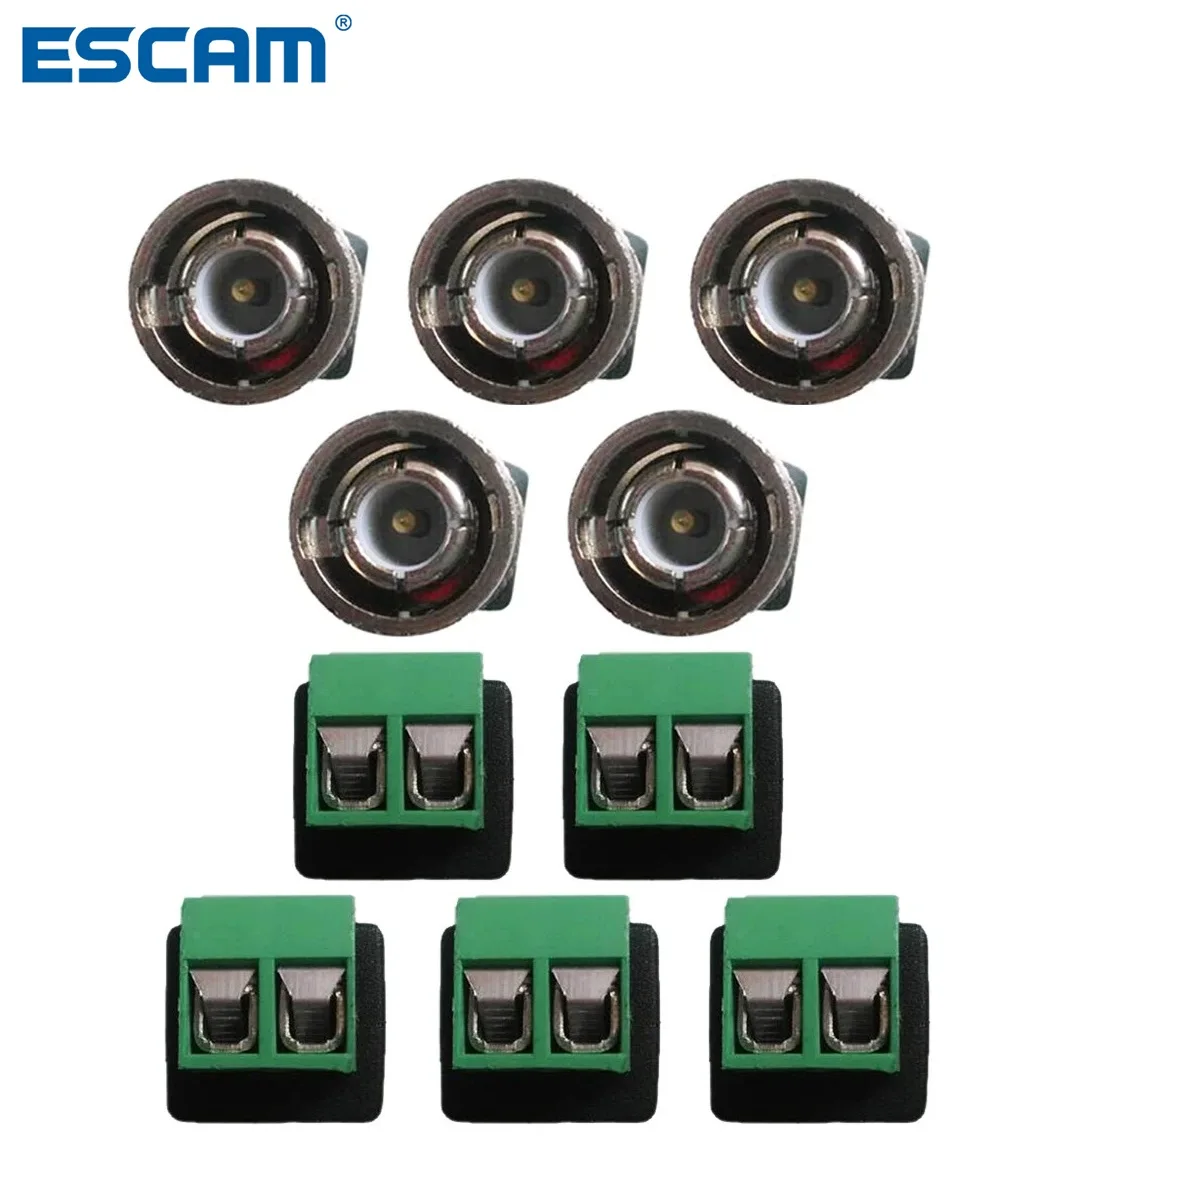 ESCAM 10stk/masse Mini Coax CAT5 Til CCTV Kamera BNC Video Balun Stik Adapter POE cctv tester IP-kamera FC